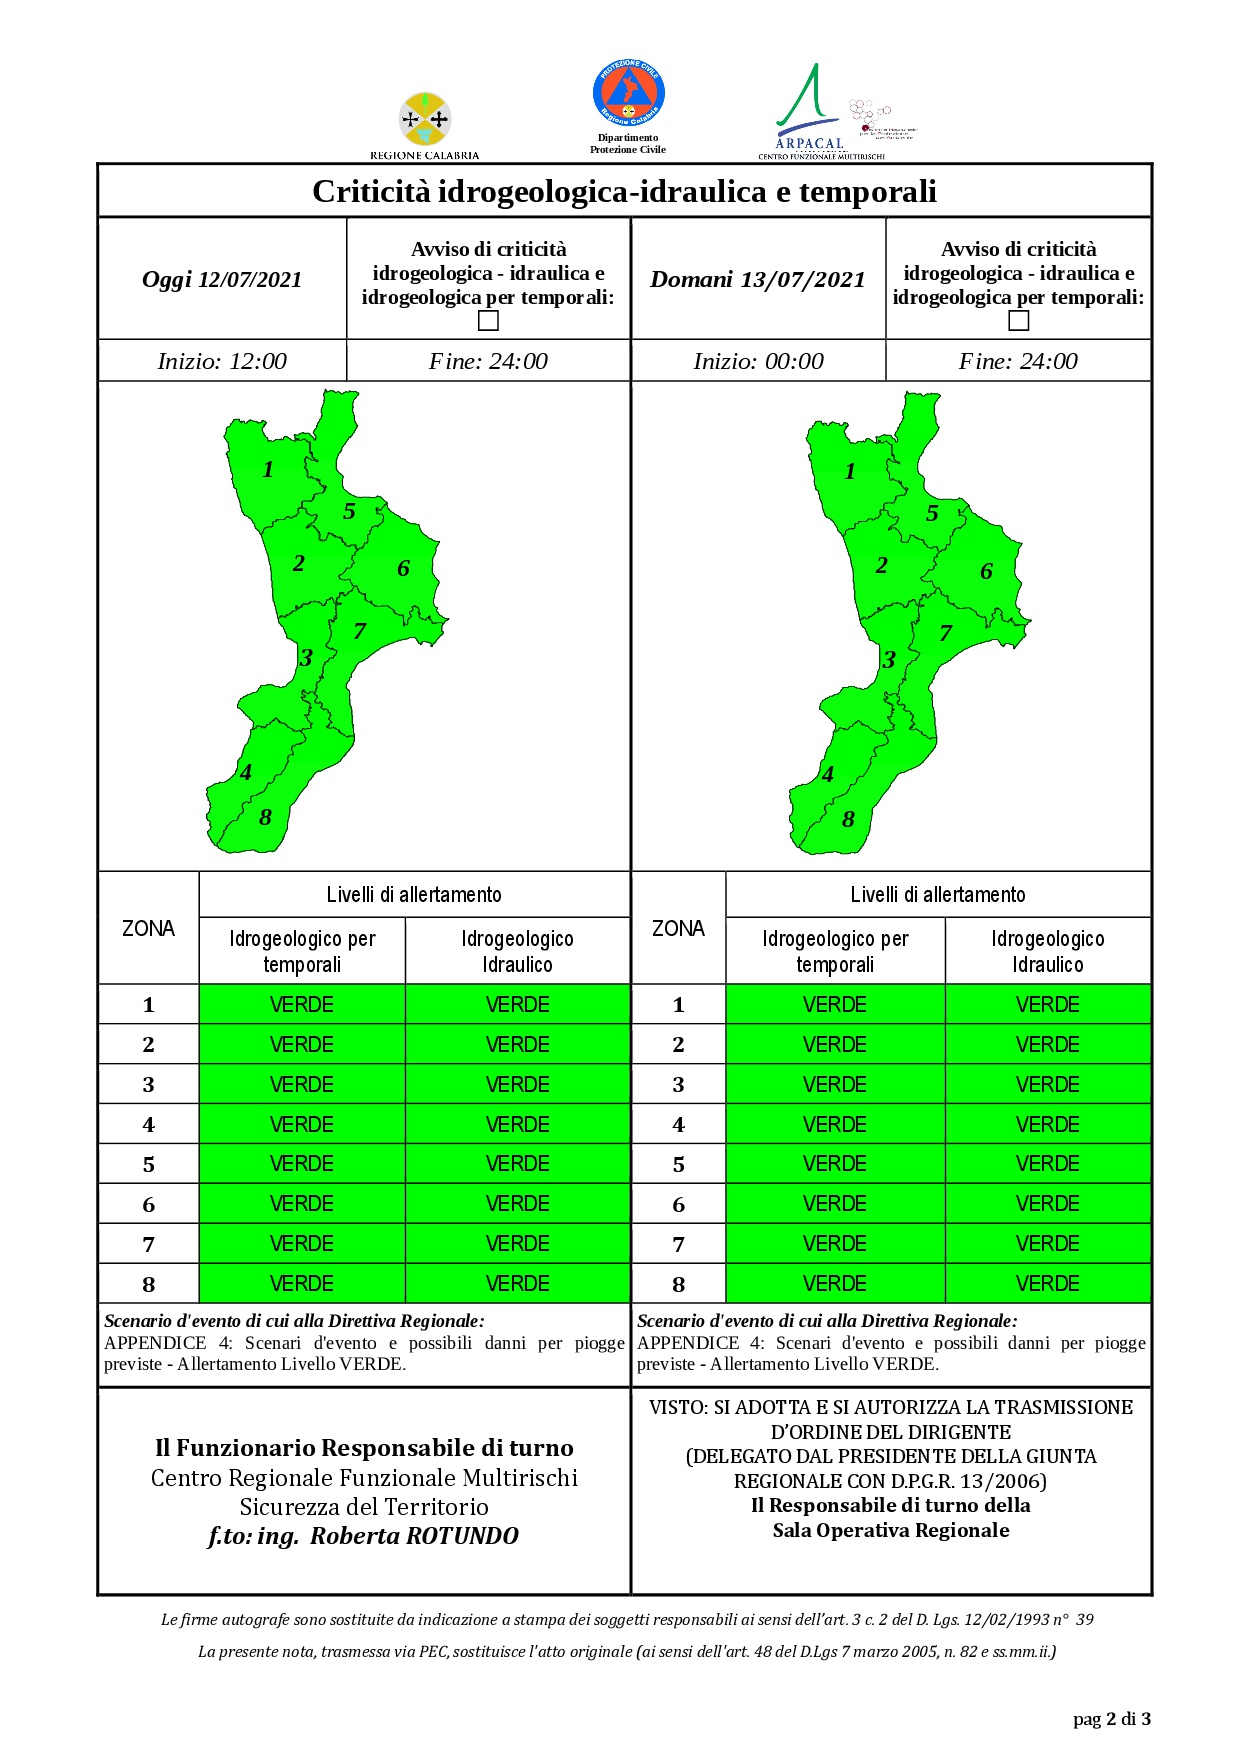 Criticità idrogeologica-idraulica e temporali in Calabria 12-07-2021